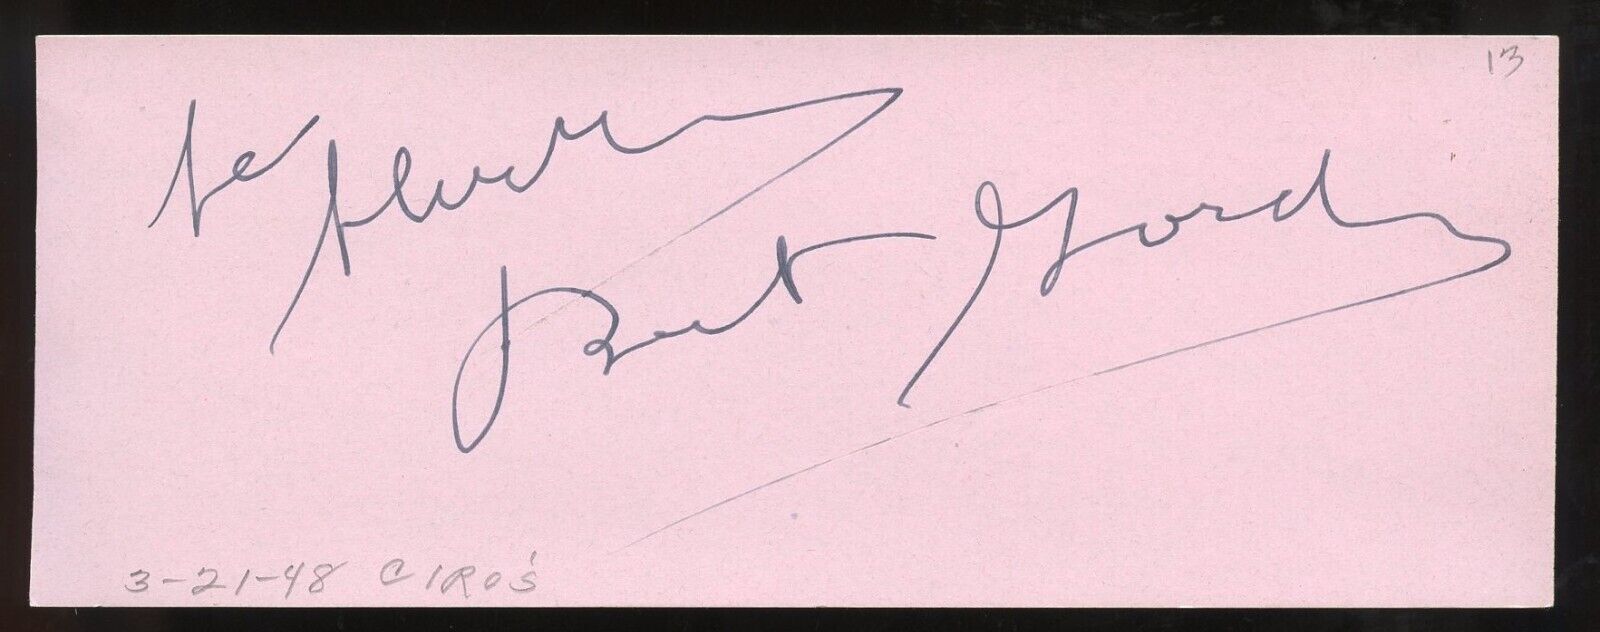 Bert Gordon d1974 signed 2x5 cut autograph on 3-21-48 at Ciro's NightClub LA